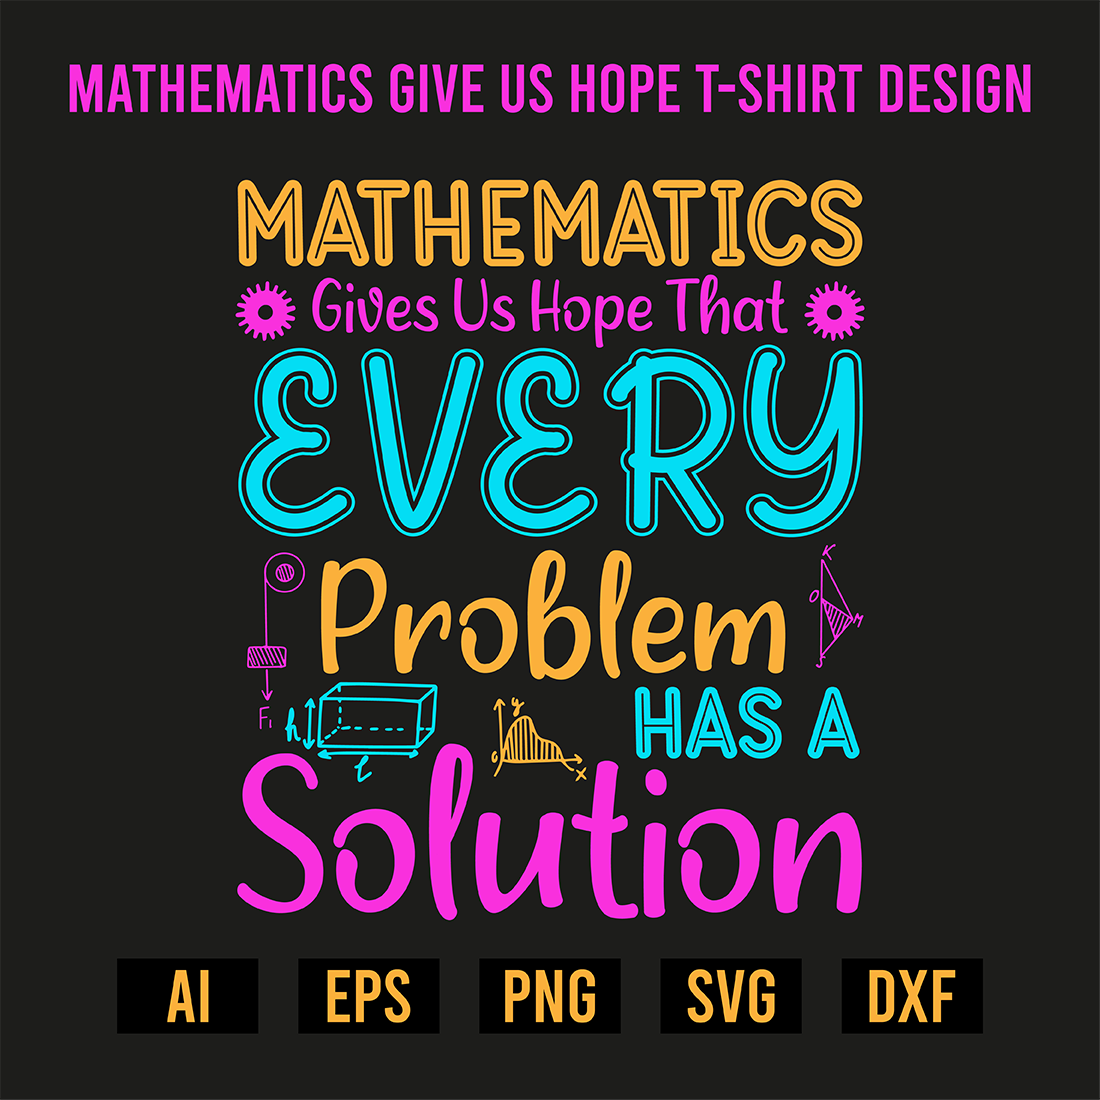 Mathematics Give Us Hope T-Shirt Design cover image.